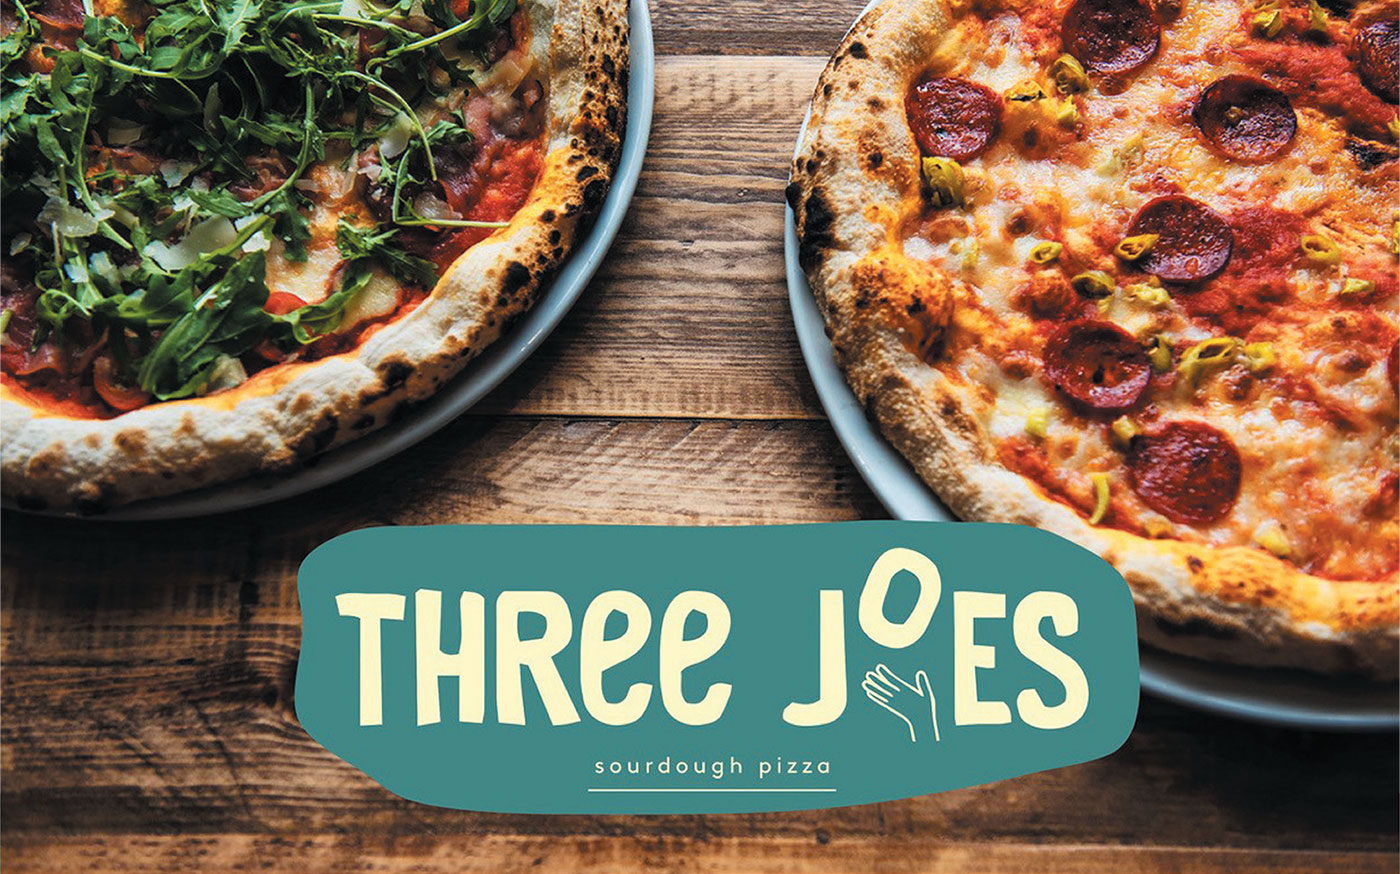 Three Joes